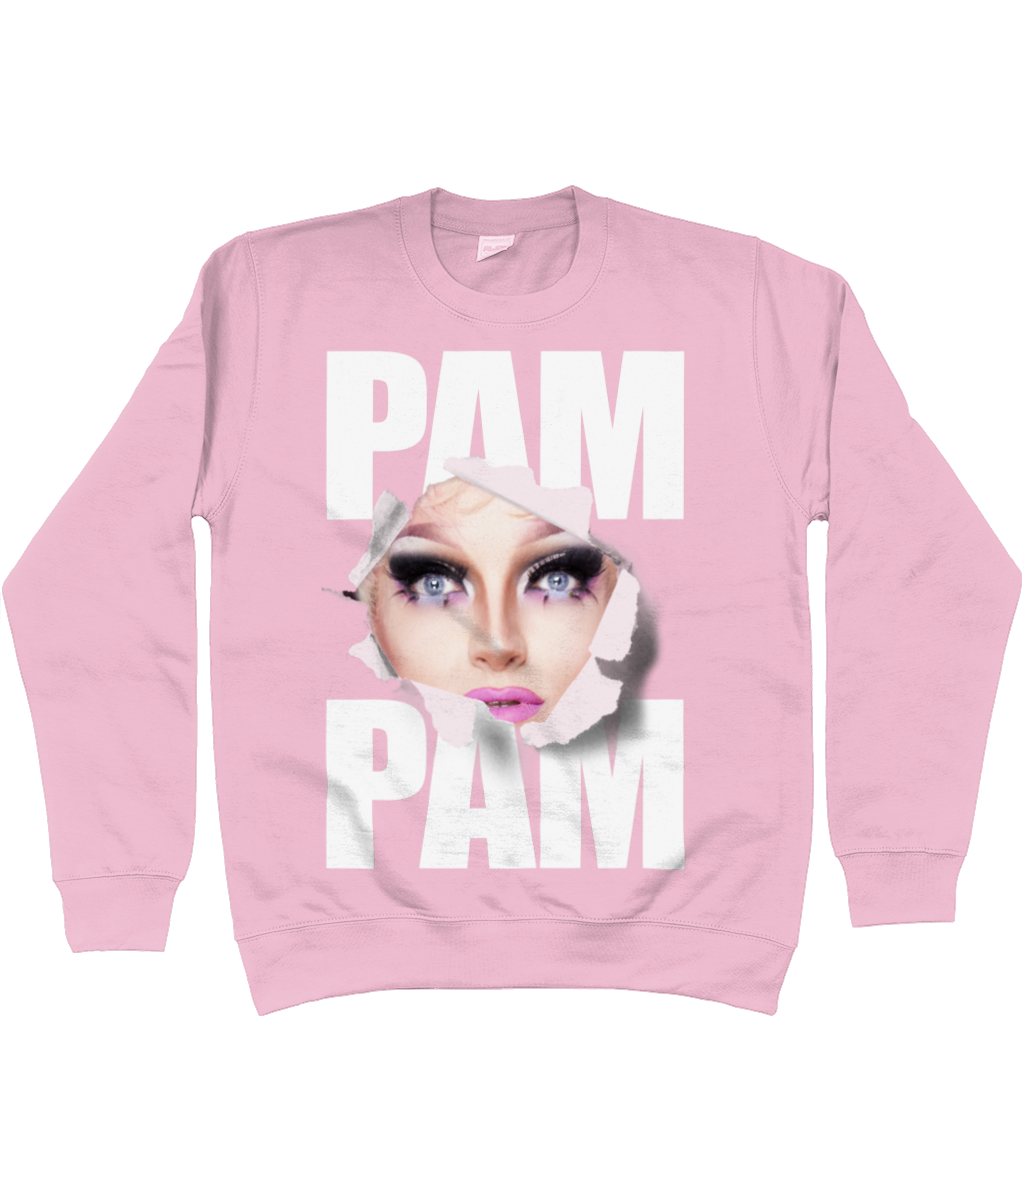 Patty Pam-Pam - Sweatshirt